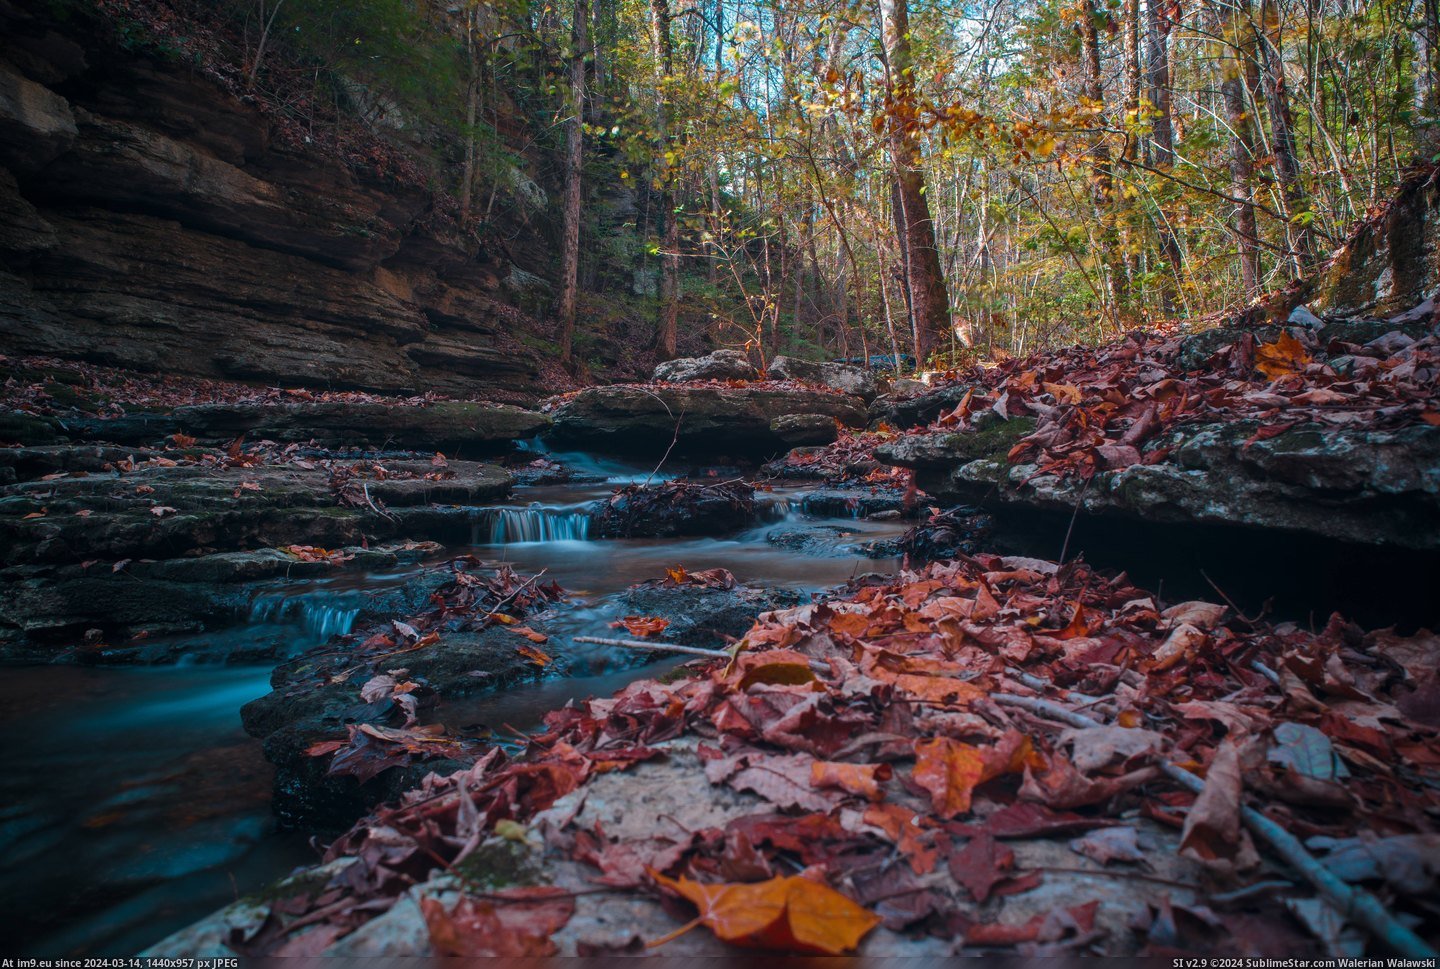 #Secret #Creek #Kentucky #6000x4000 #Location [Earthporn] Creek at a secret location in Kentucky,  [6000x4000] Pic. (Image of album My r/EARTHPORN favs))